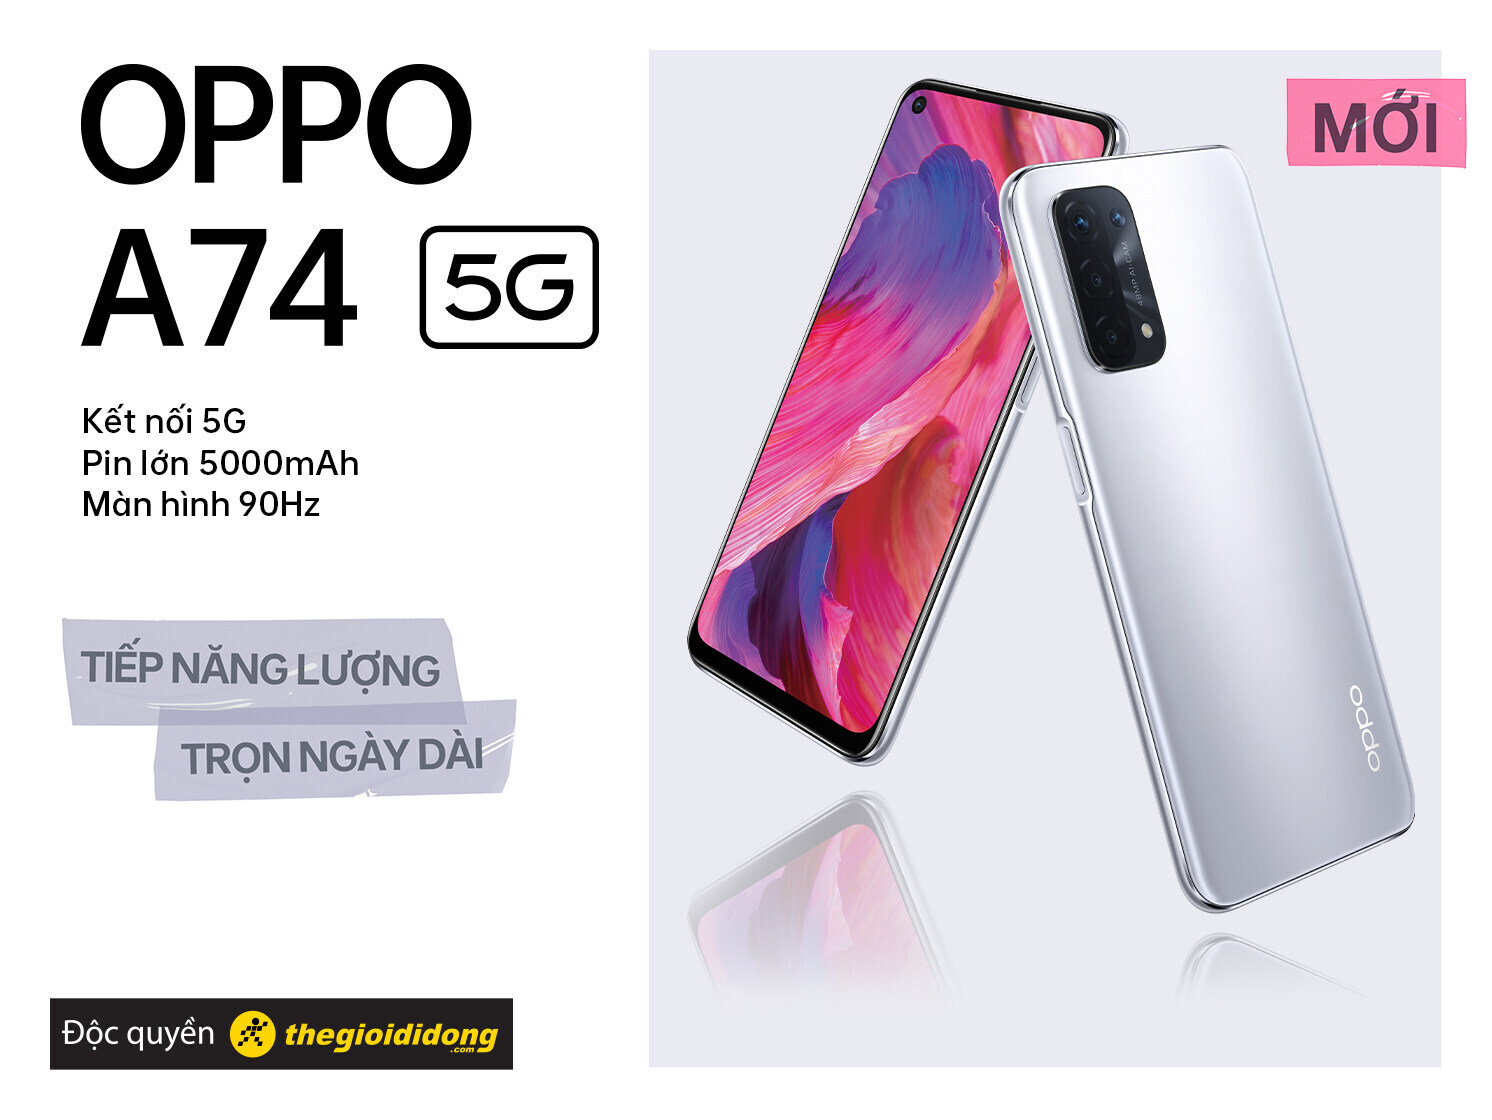 OPPO chính giới thiệu OPPO A74 5G | OPPO Việt Nam